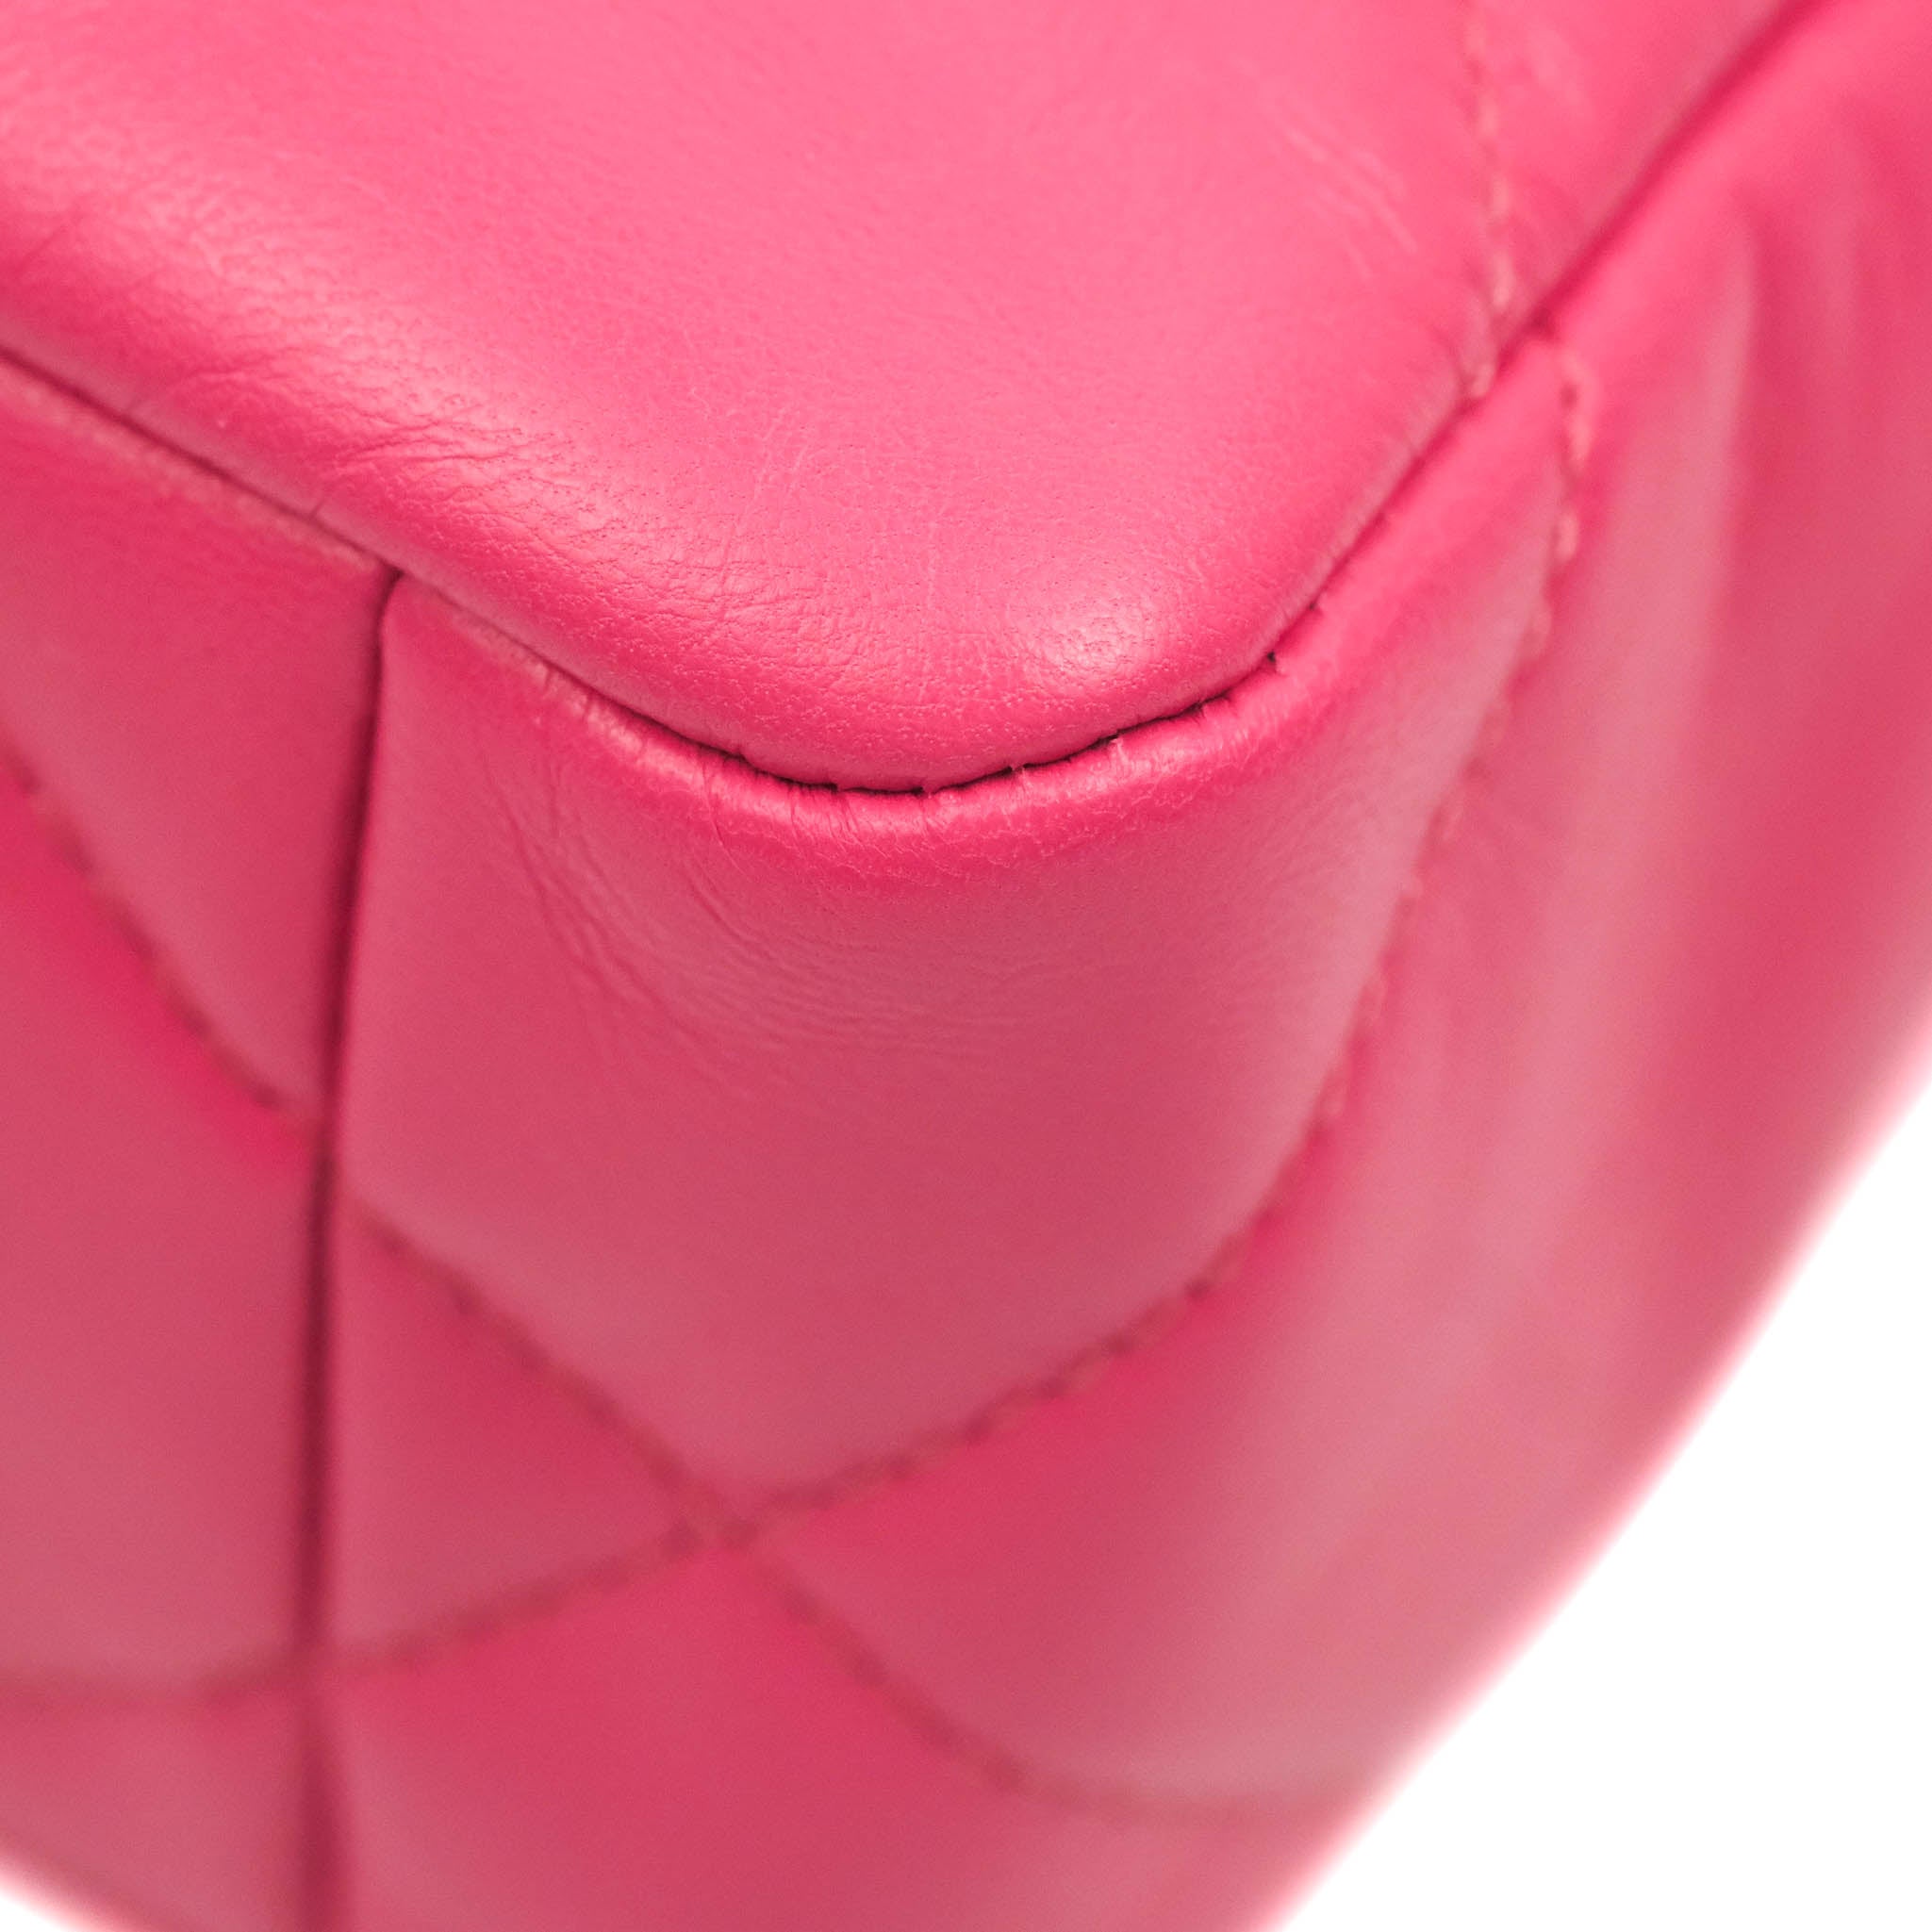 Chanel 19 Small, 22K Hot Pink Lambskin, New in Box MA001